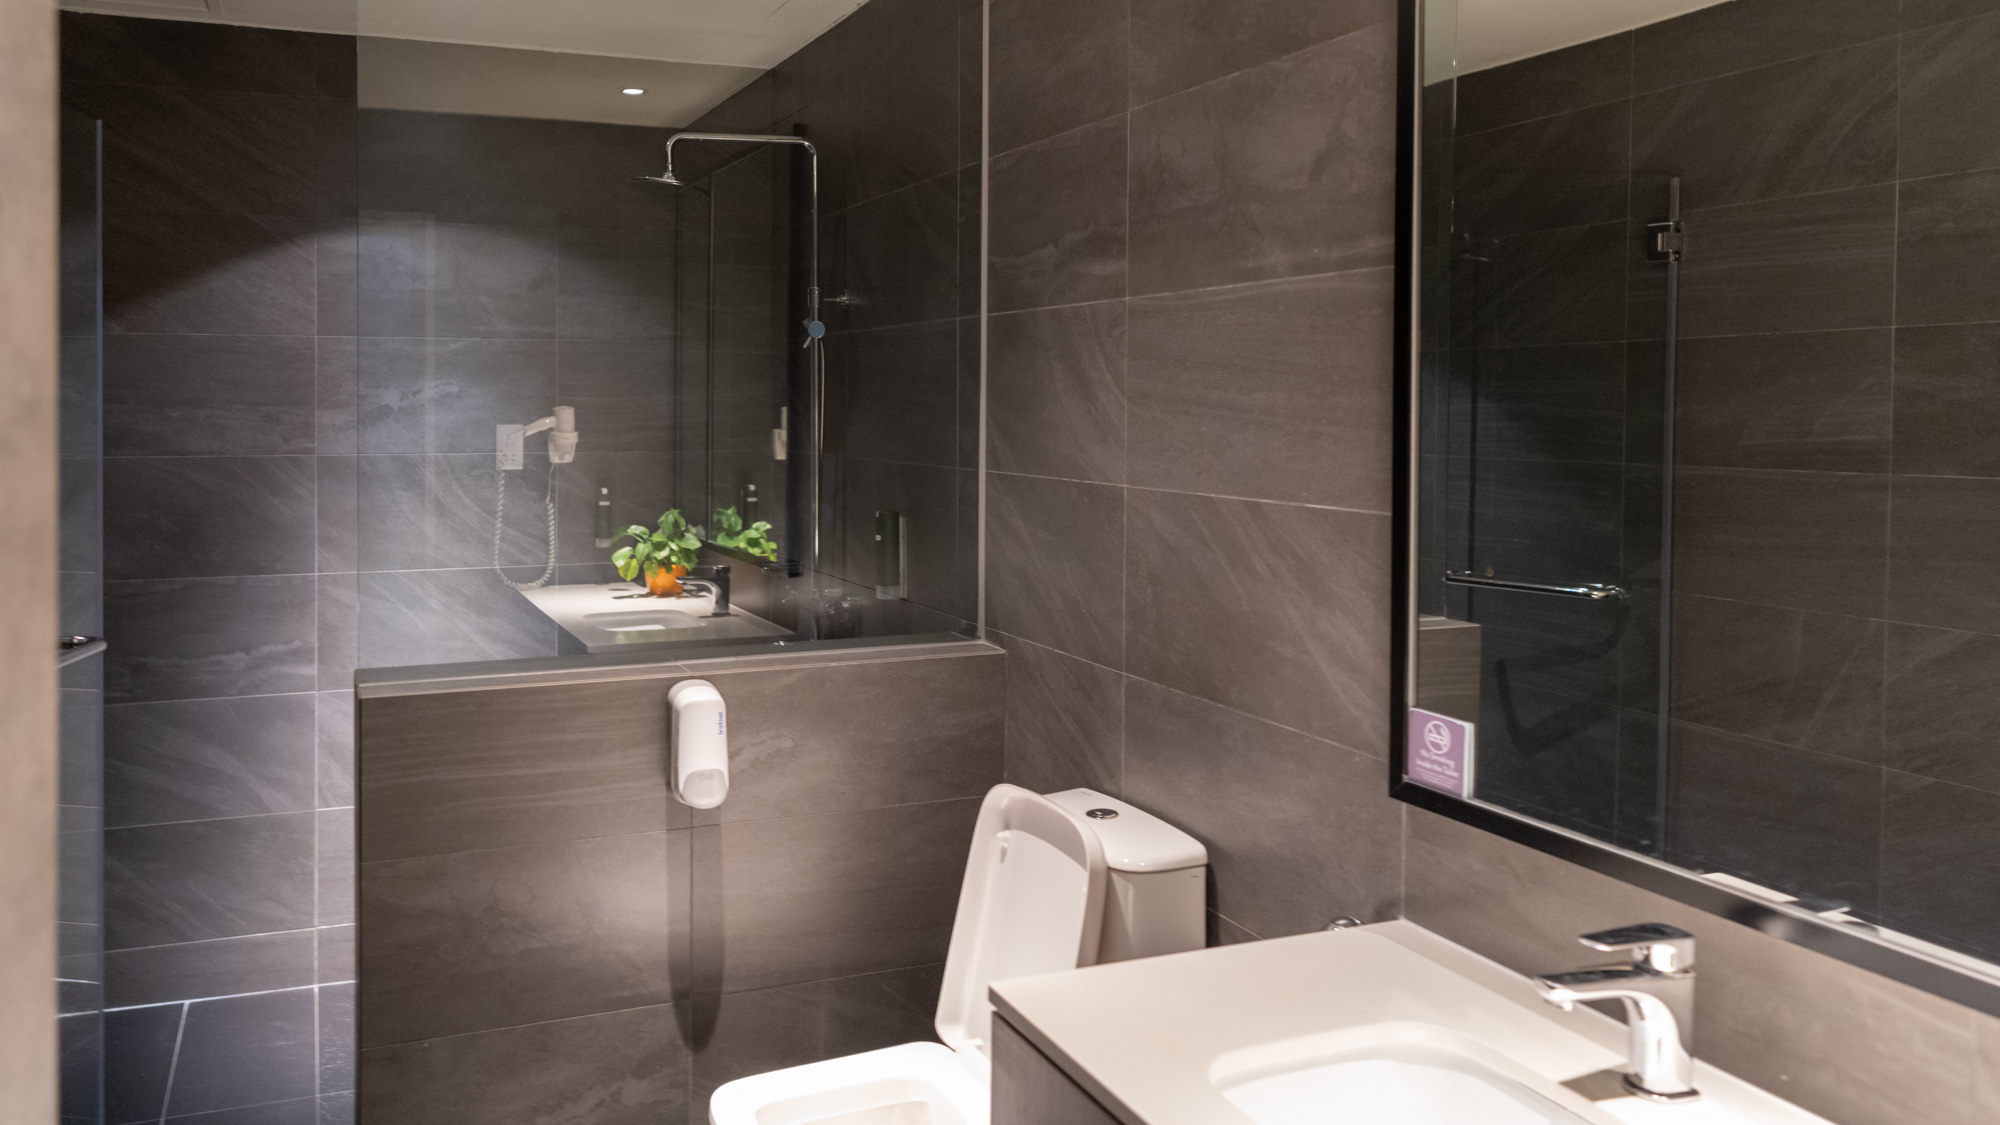 Aerotel Singapore Solo Room shared bathroom